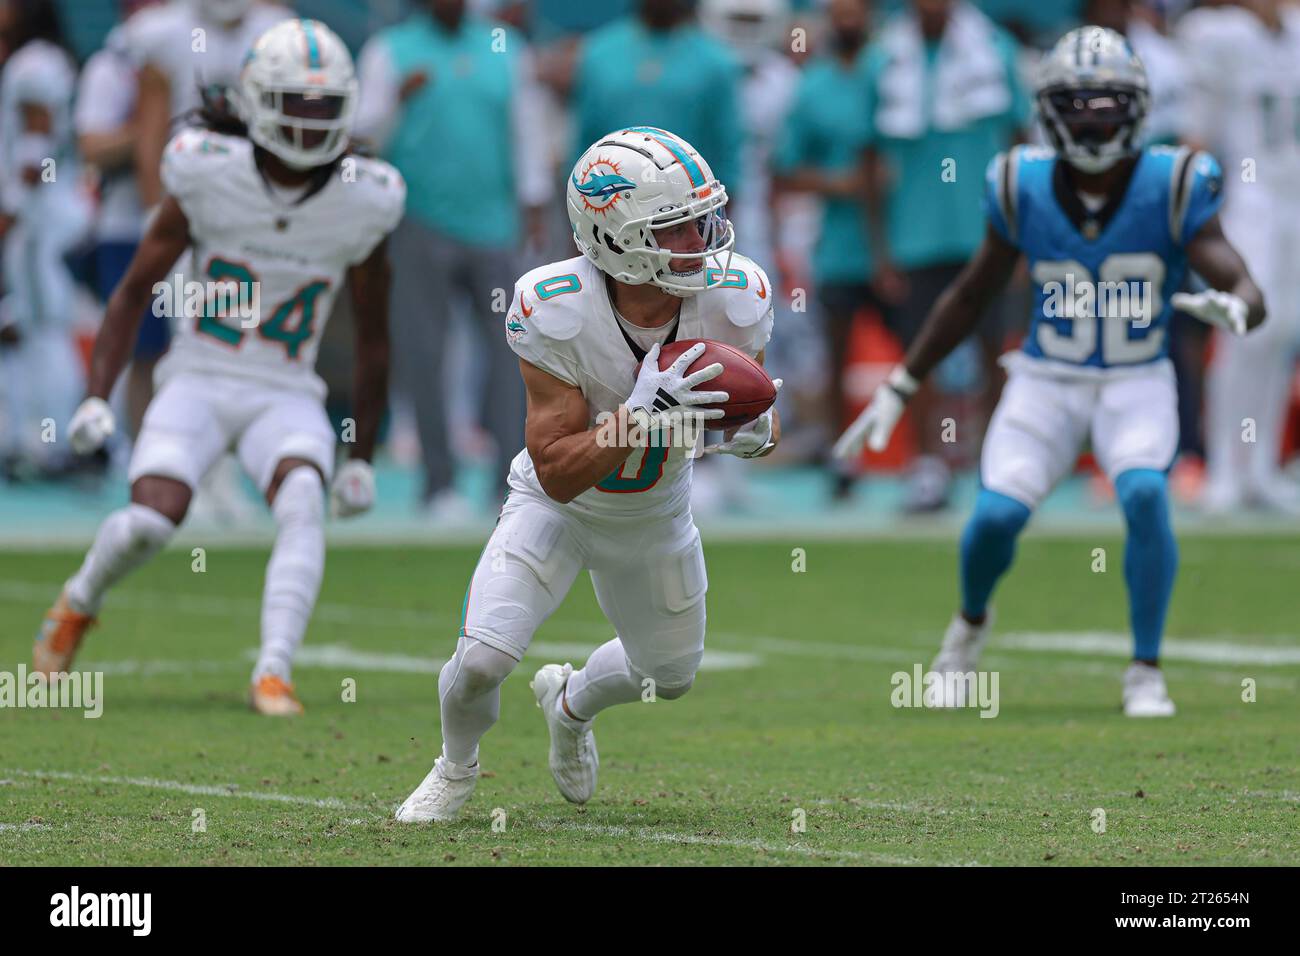 Miami. FL USA;  during an NFL game, Sunday, October 15, 2023, at the Hard Rock Stadium.  The Dolphins beat the Panthers 42-21.   (Kim Hukari/Image of Stock Photo